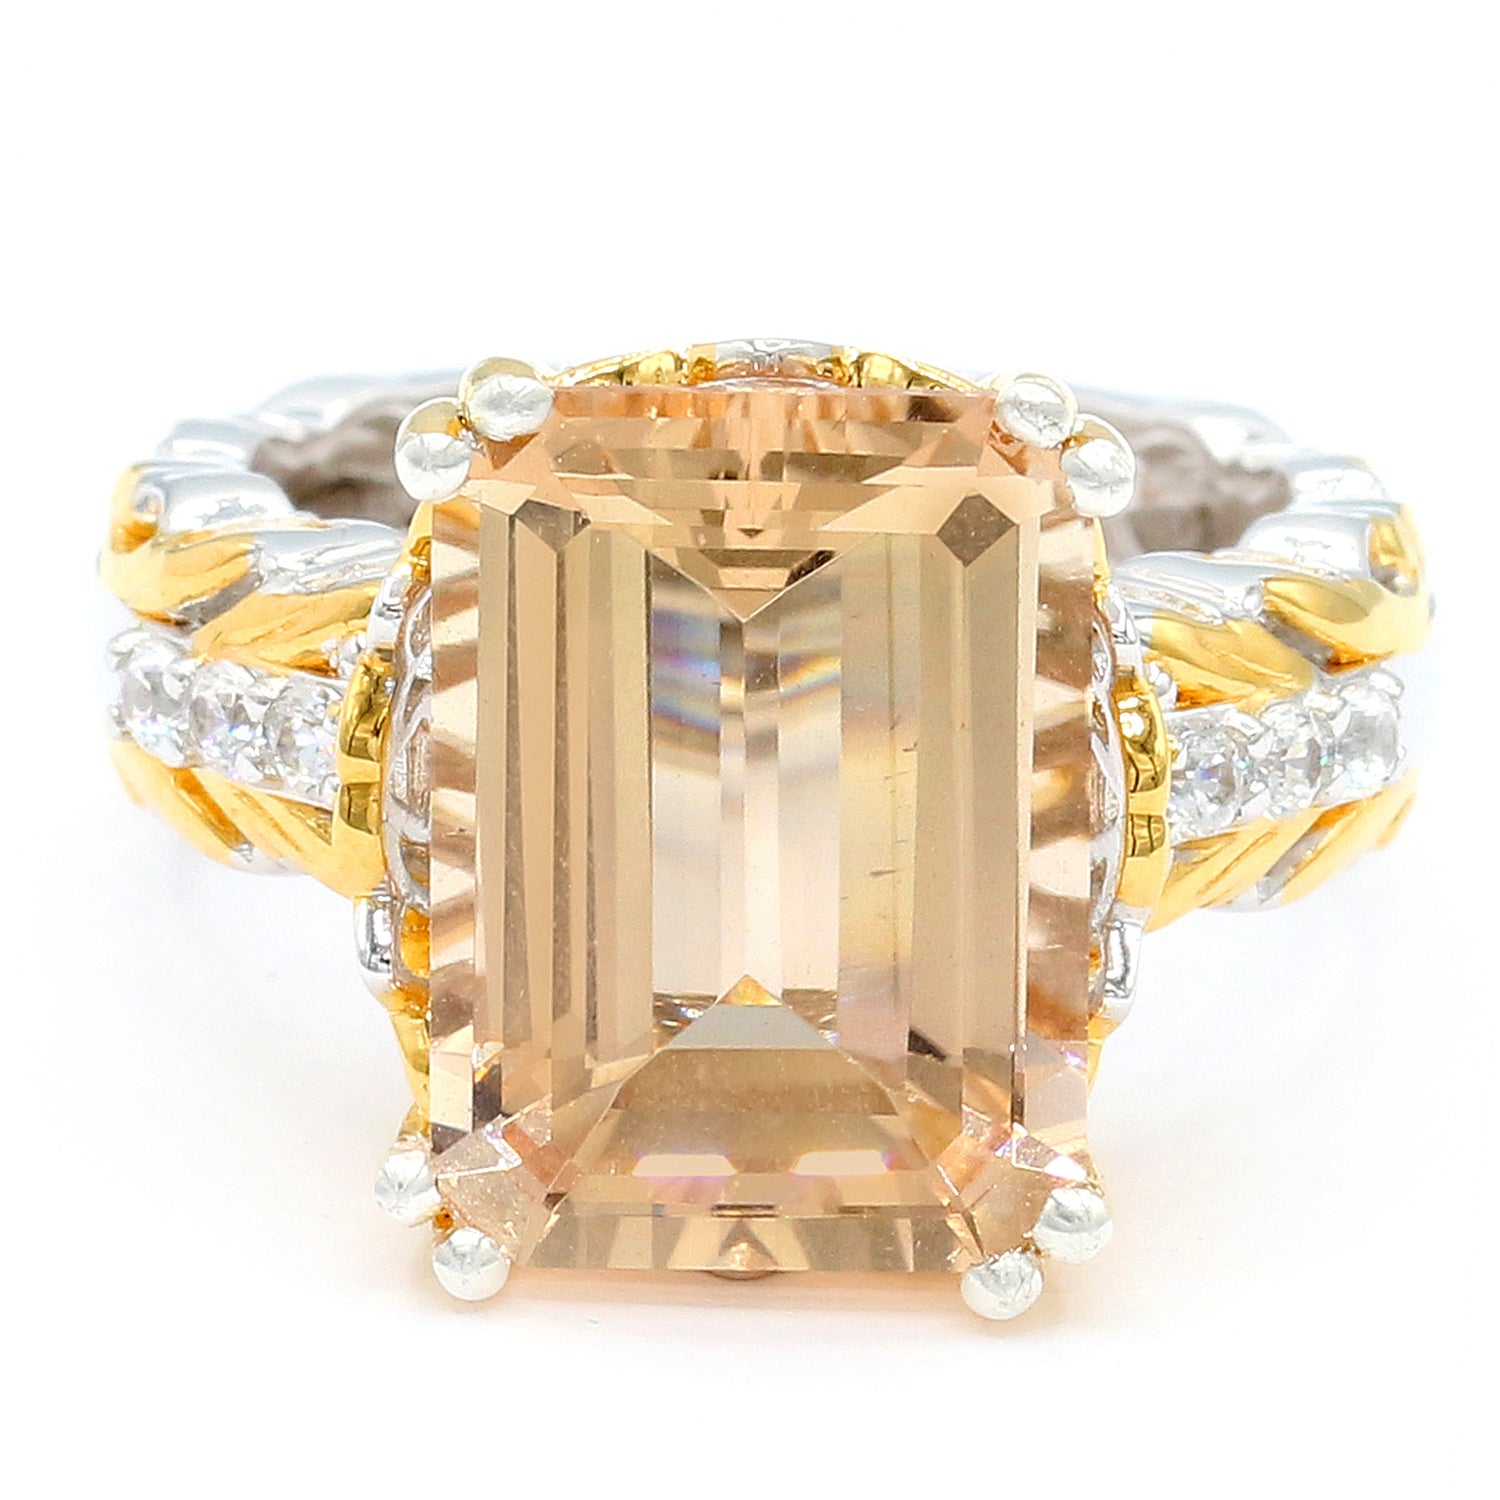 Limited Edition Gems en Vogue 8.82ctw Peach Morganite & White Zircon Ring